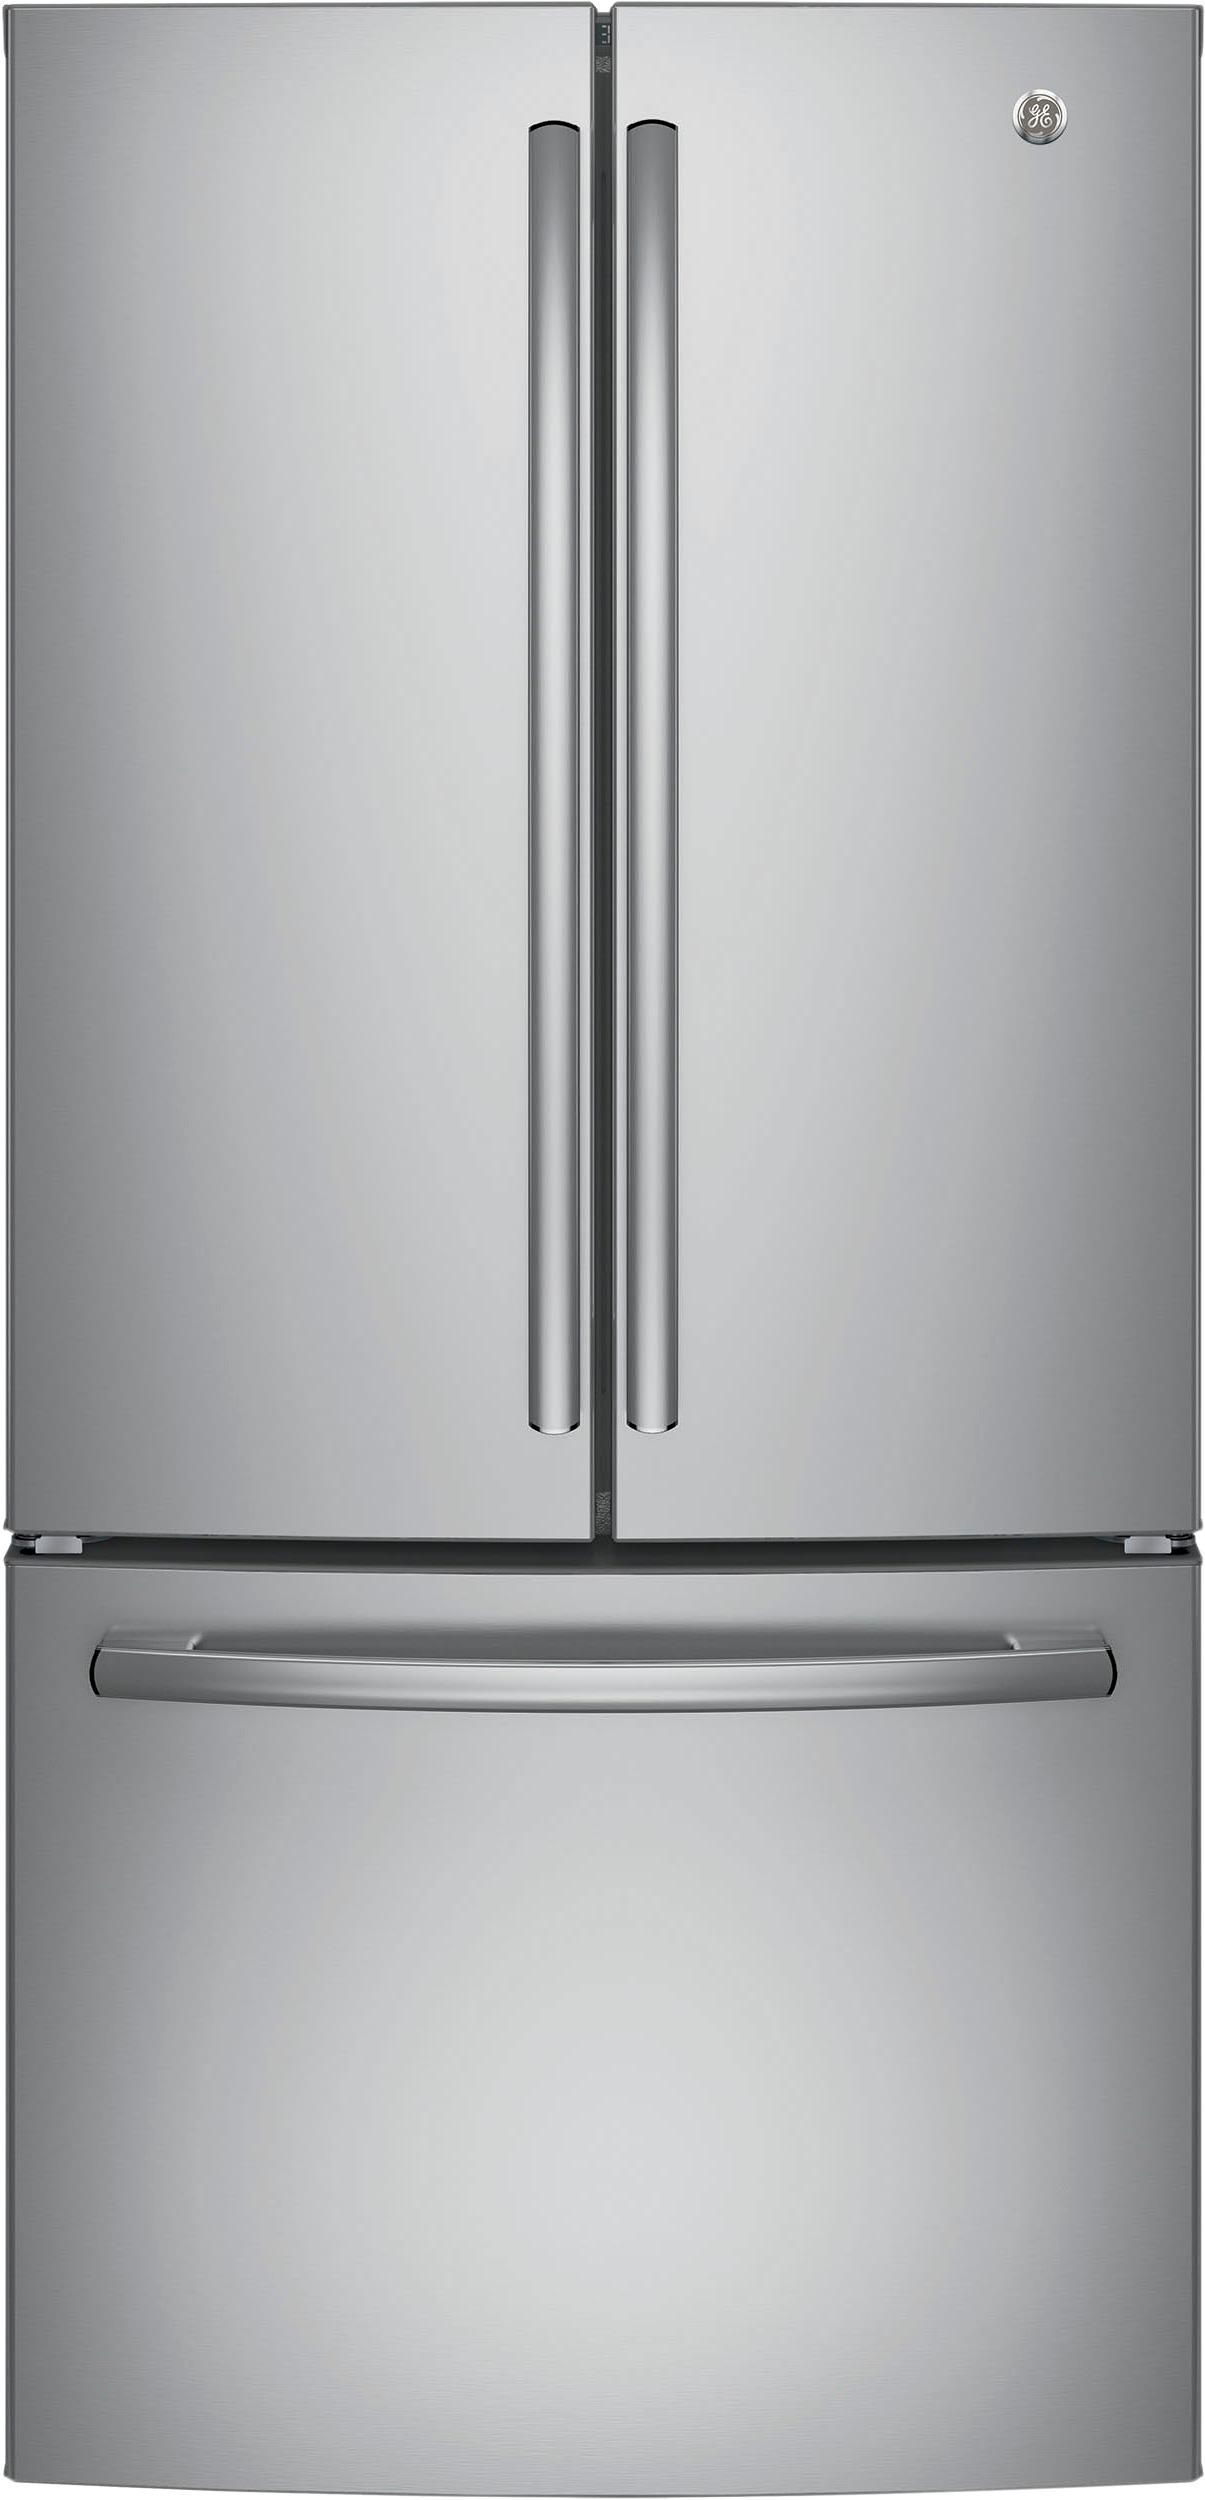 Best Buy: GE 24.8 Cu. Ft. French Door Refrigerator Stainless steel ...